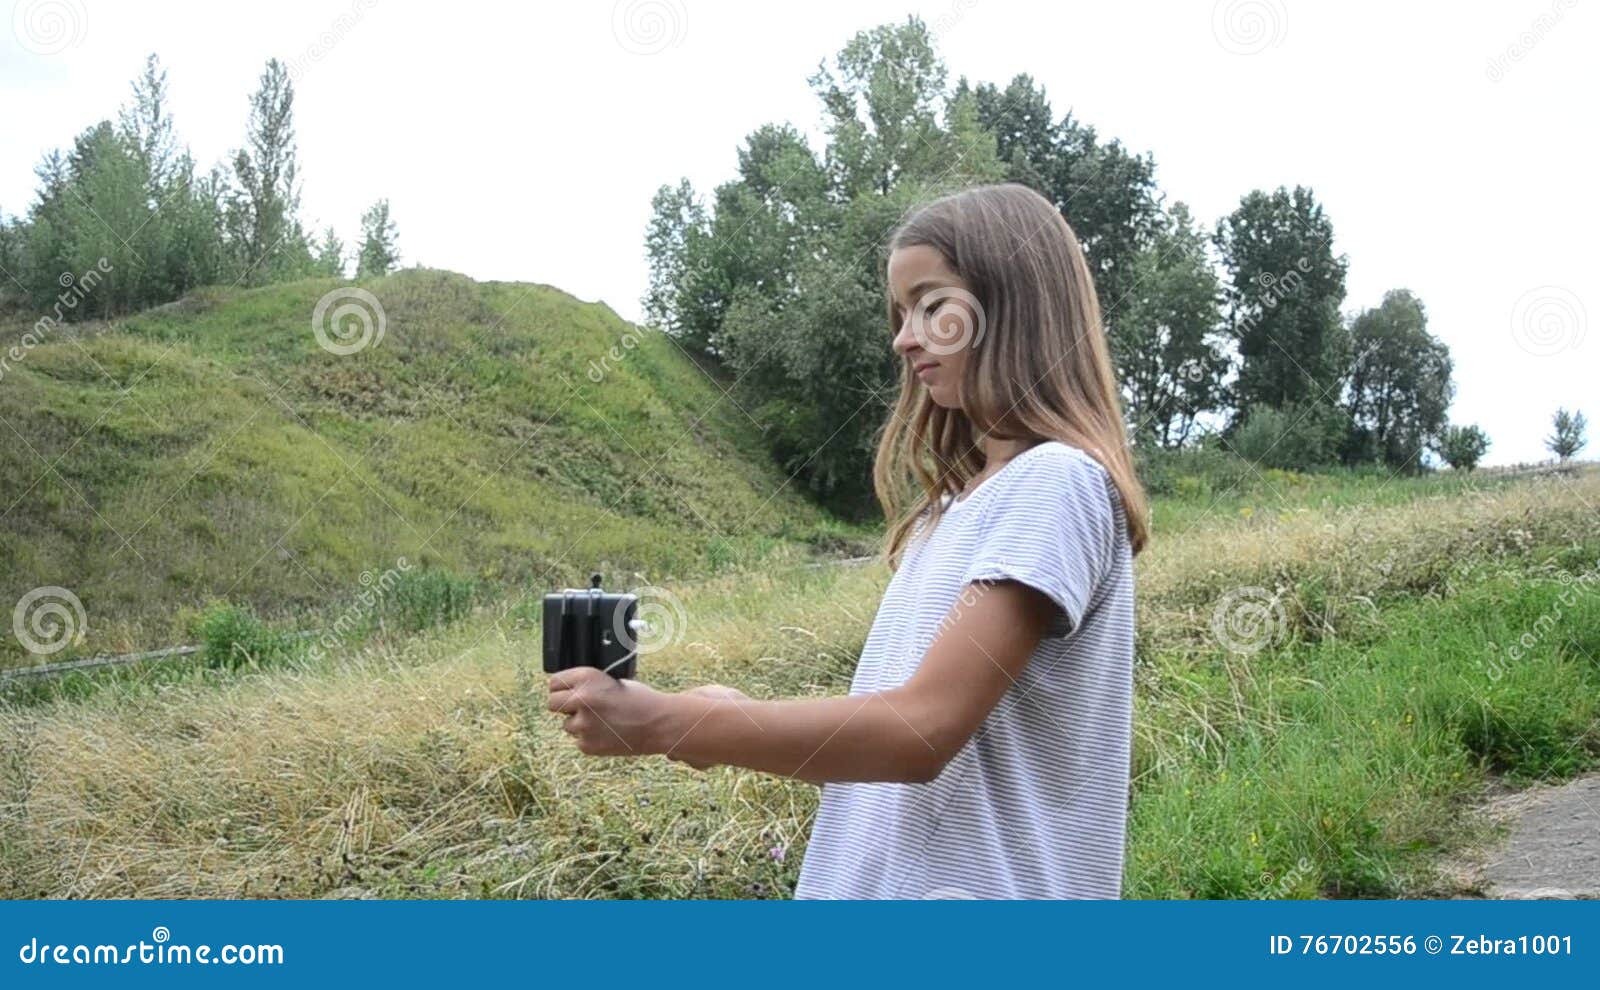 Girl wanted take selfie camera pic